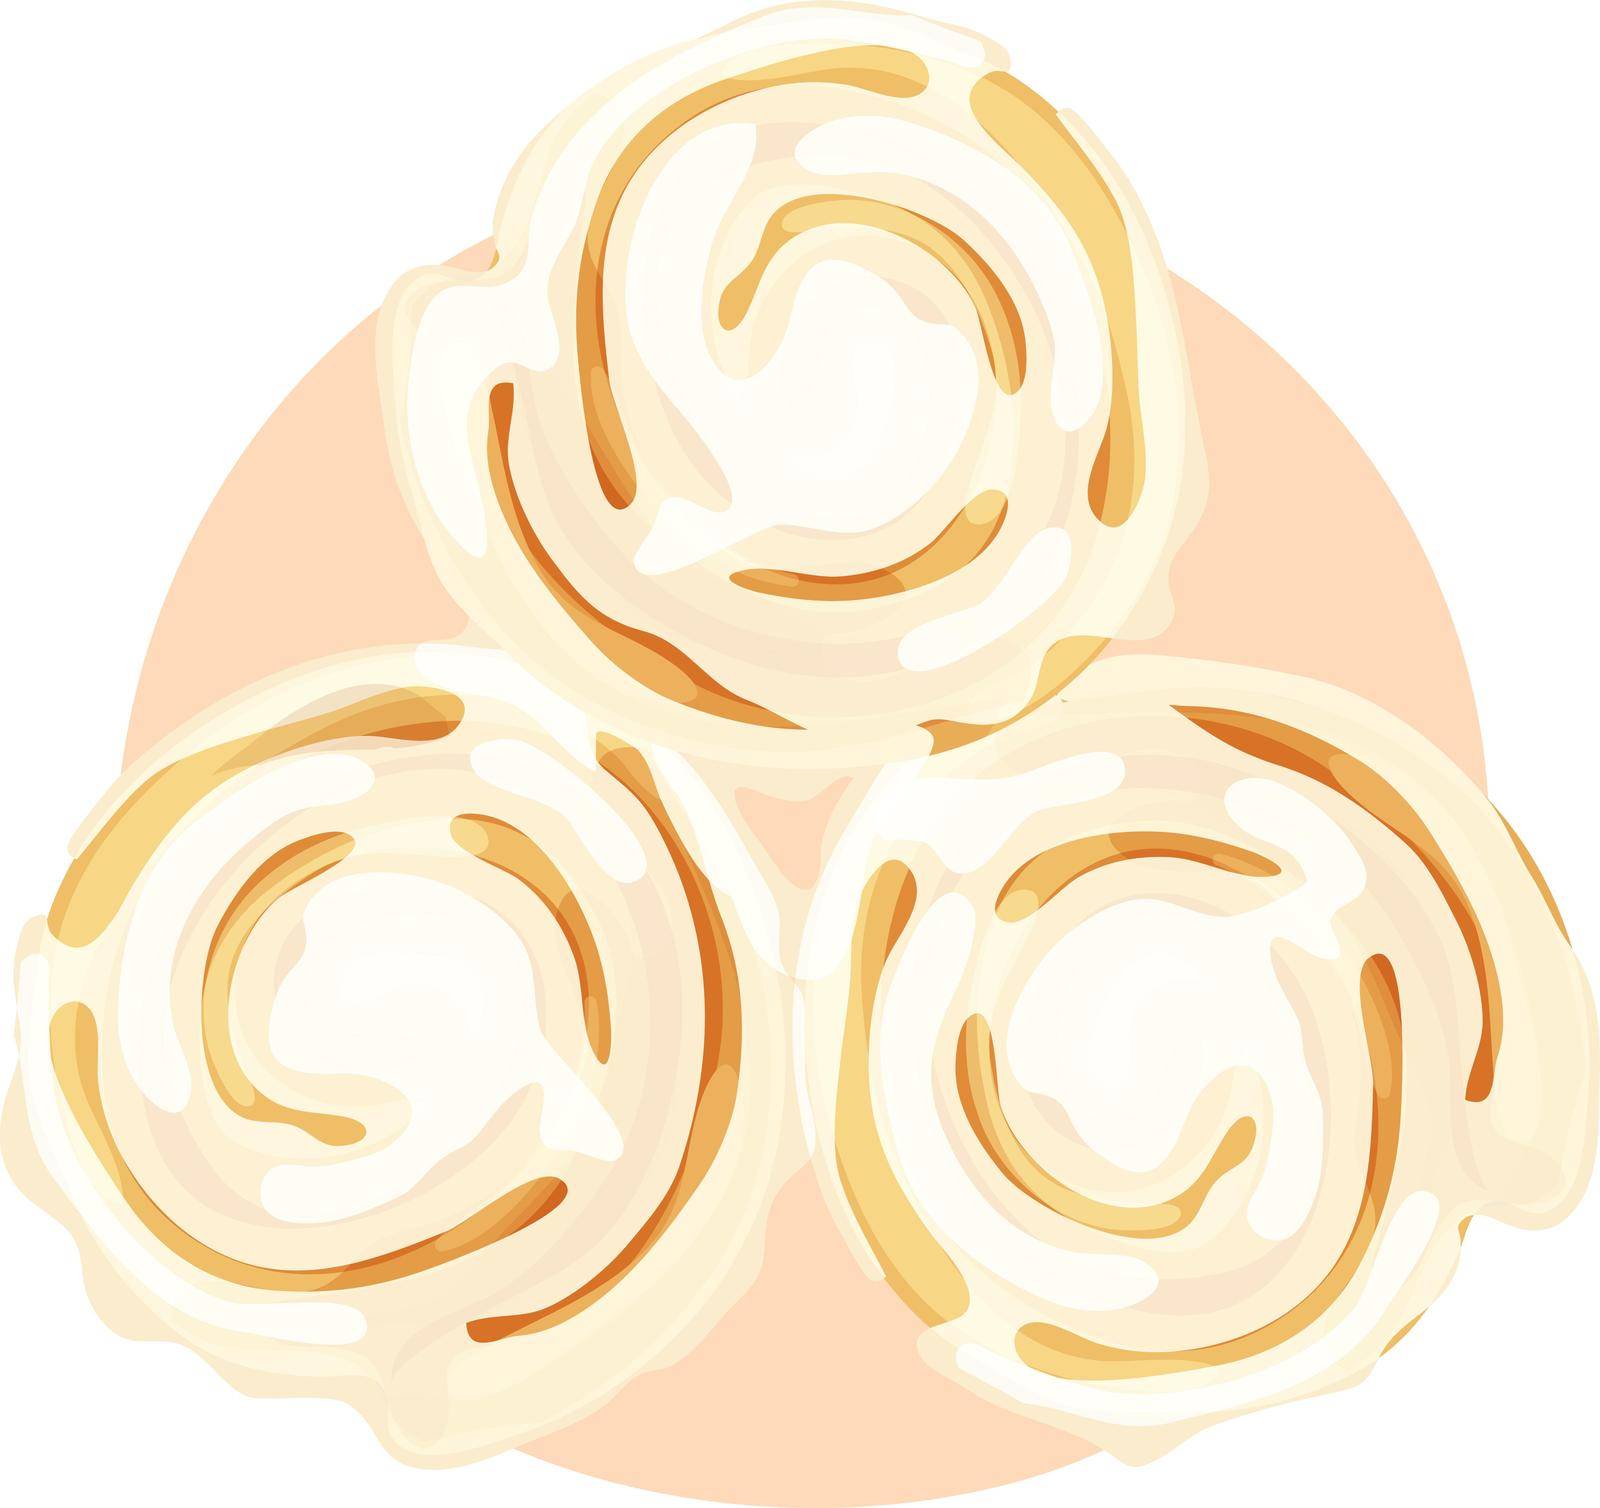 Three iced cinnamon buns on an orange circle background. Isolated vector illustration.